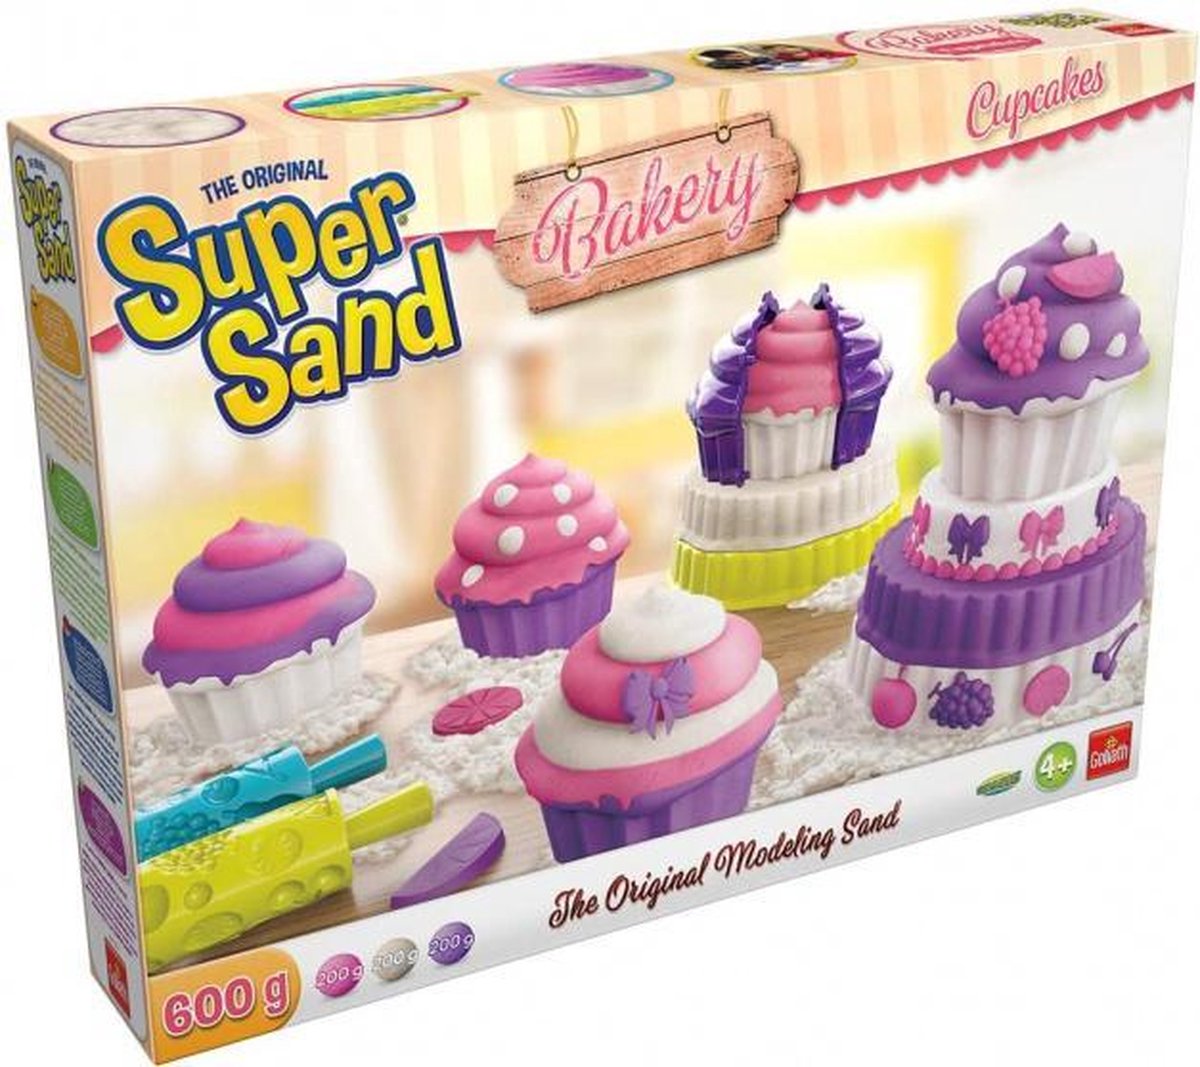 Super Sand Cupcakes speelzand